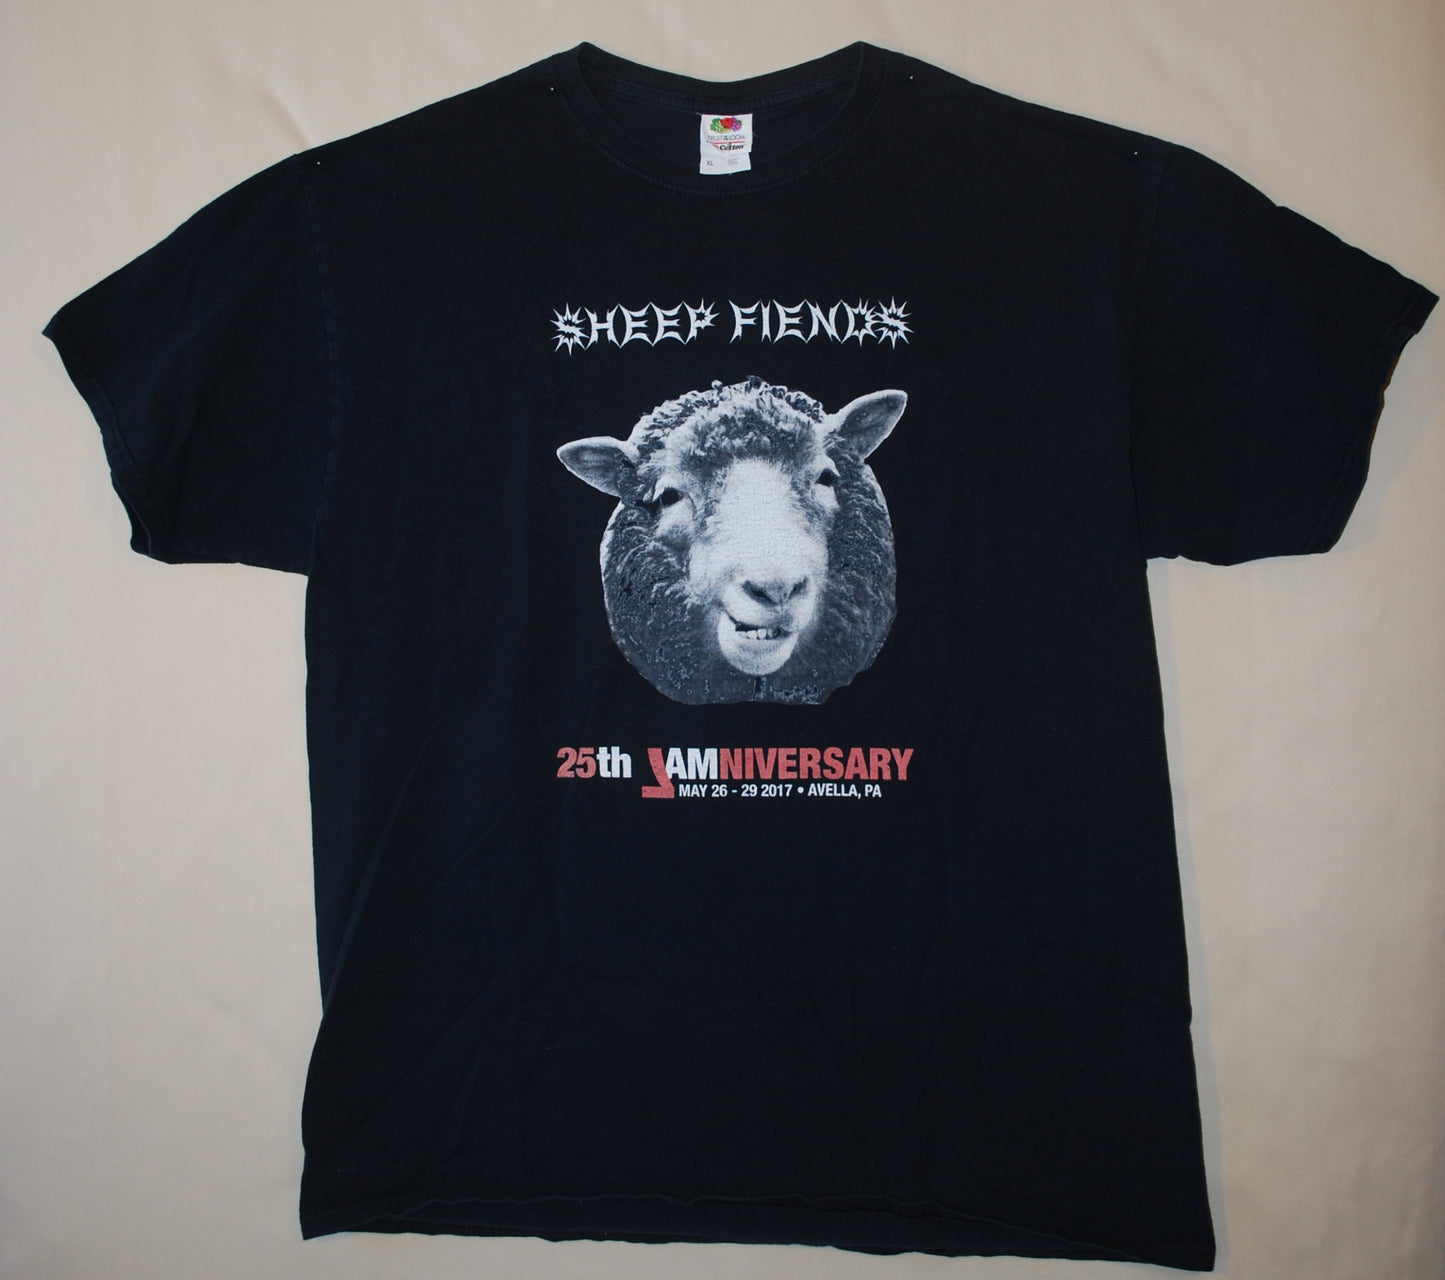 Vintage Sheep Fiends 25th Jamniversary Farm Jam VII 2016 Black XL Preowned